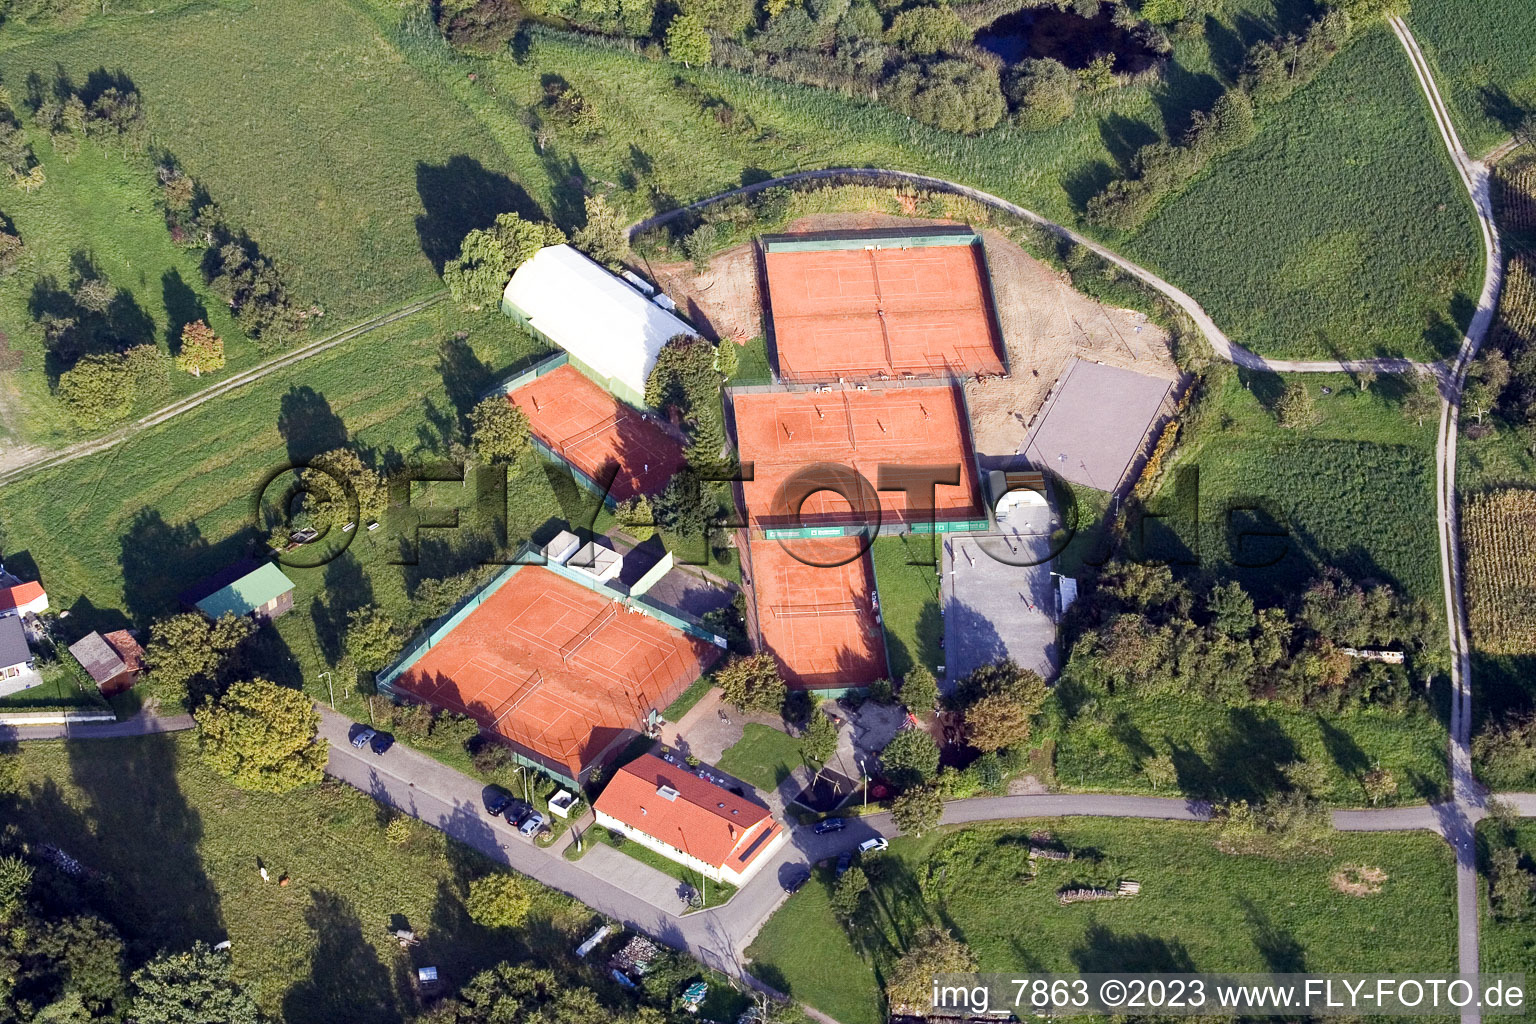 Aerial view of Tennis club in the district Maximiliansau in Wörth am Rhein in the state Rhineland-Palatinate, Germany